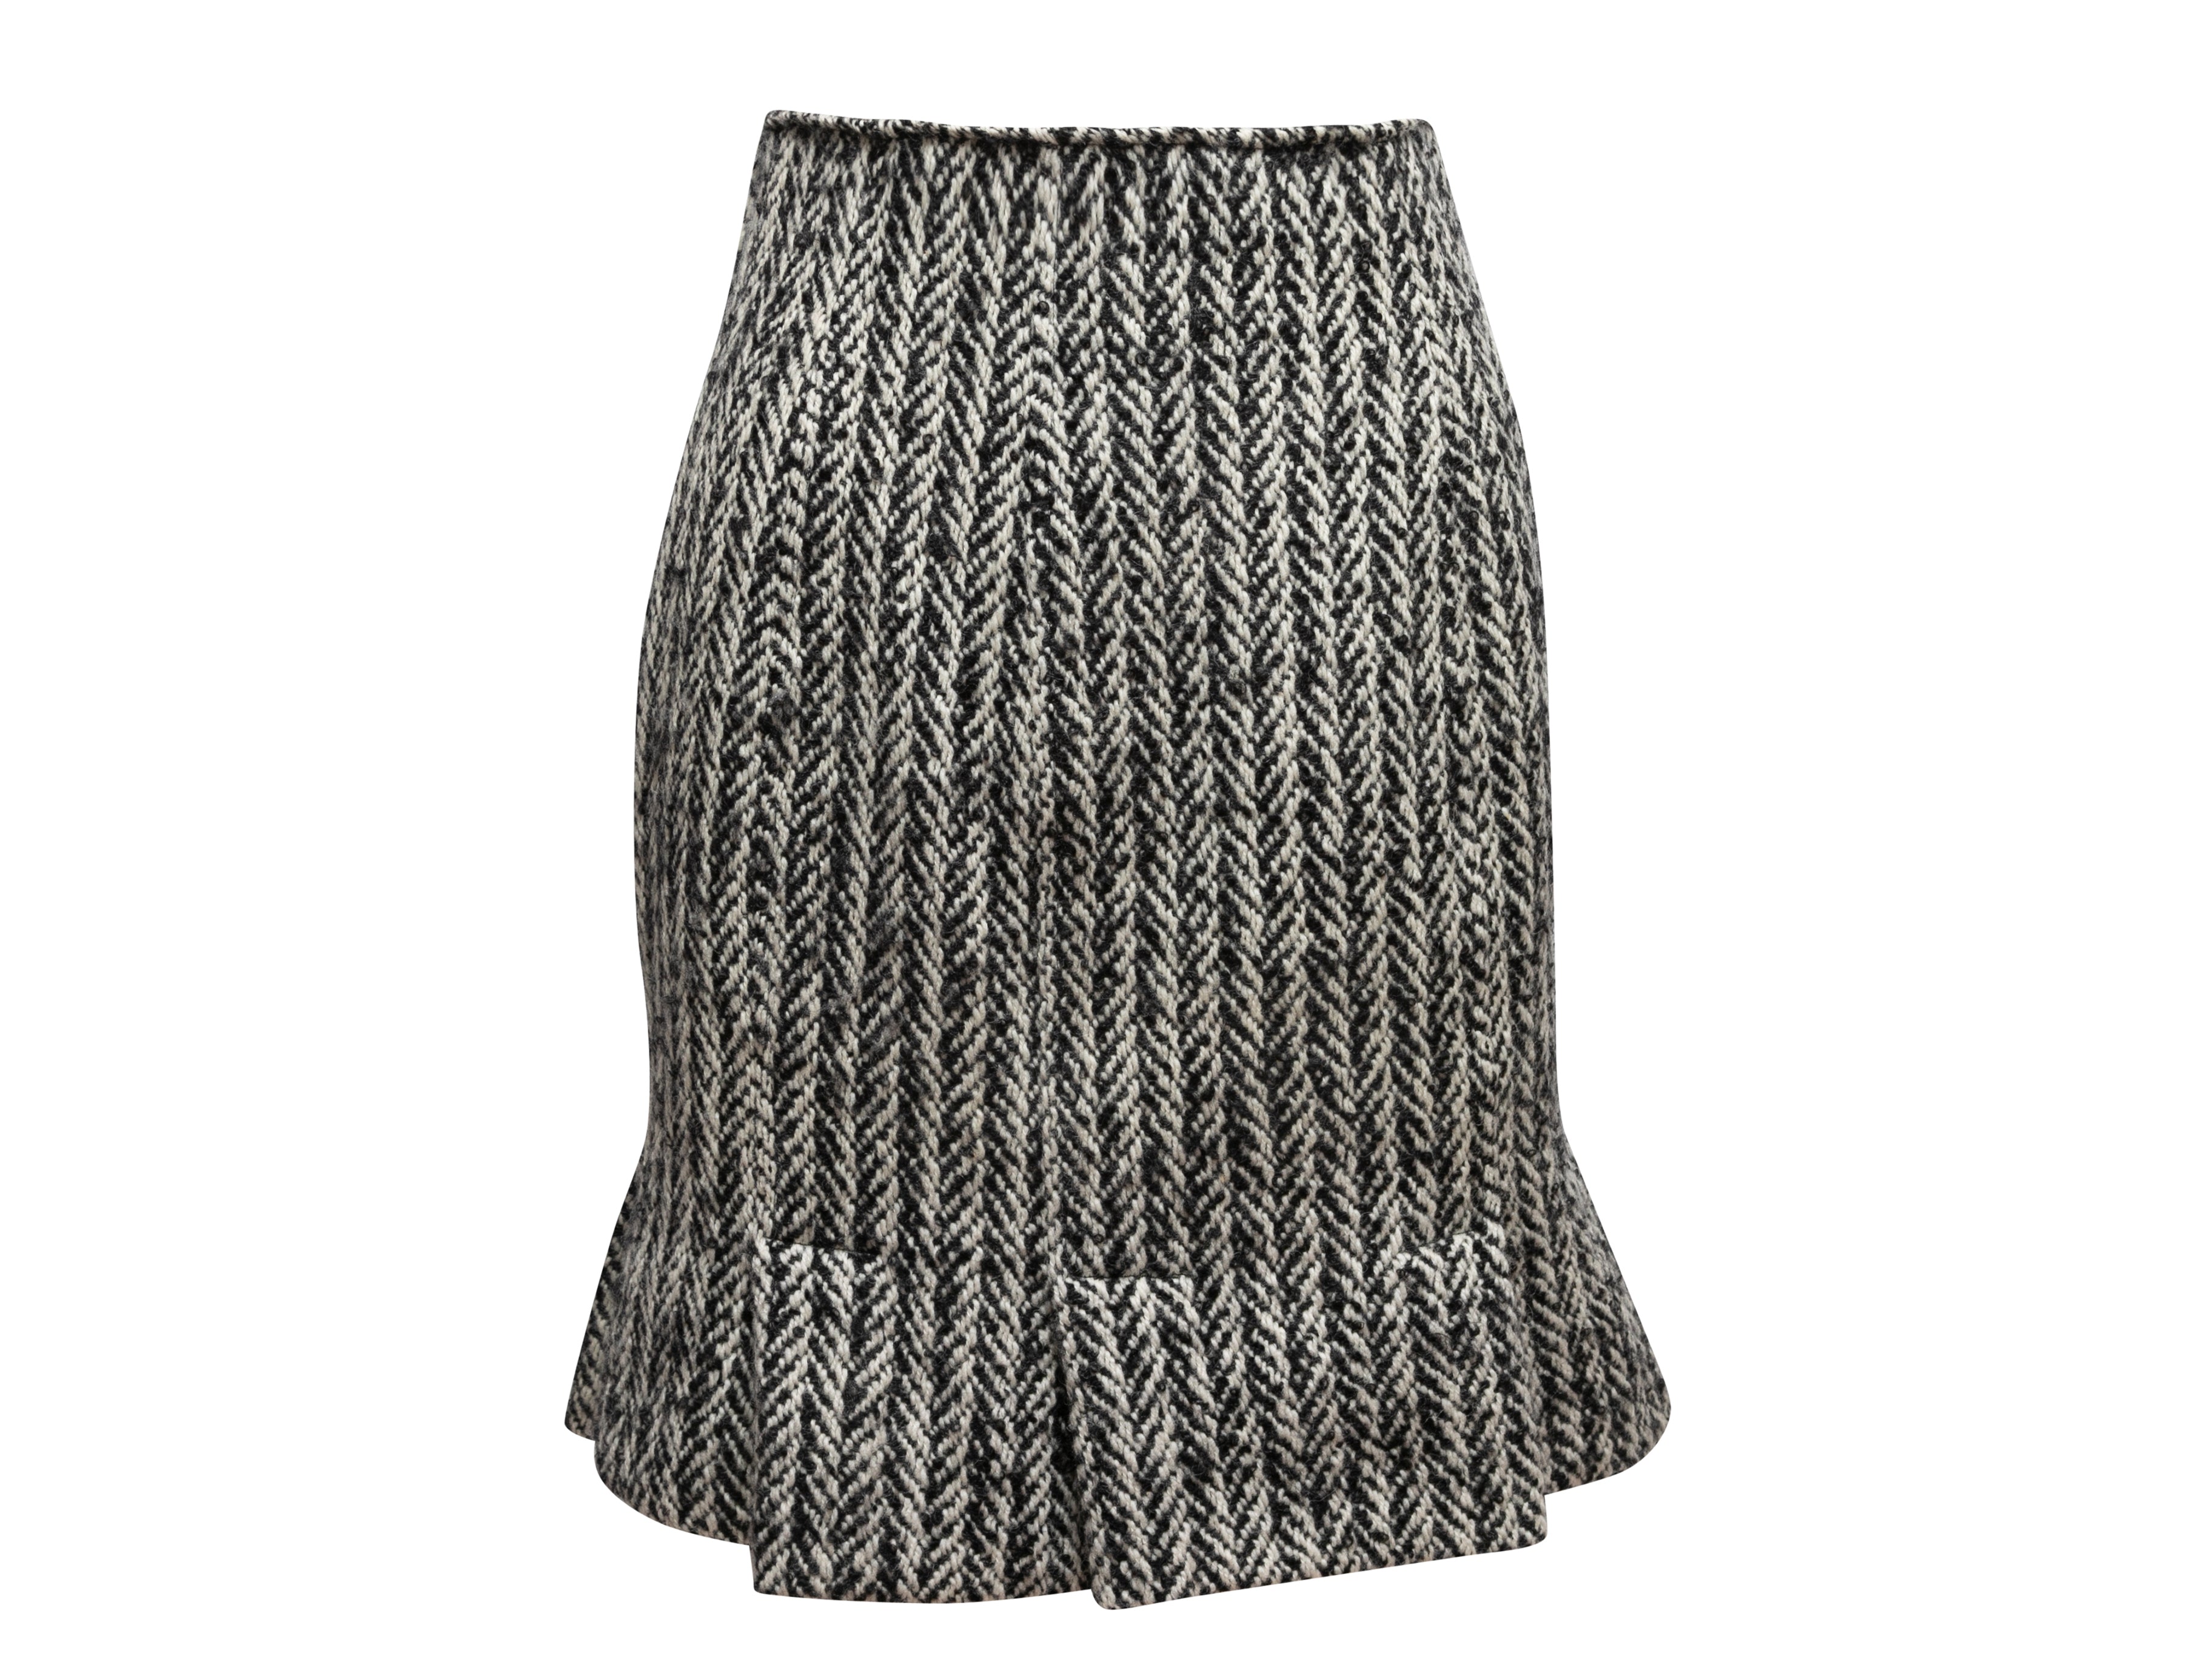 Black & Herringbone Wool Skirt Size US 6